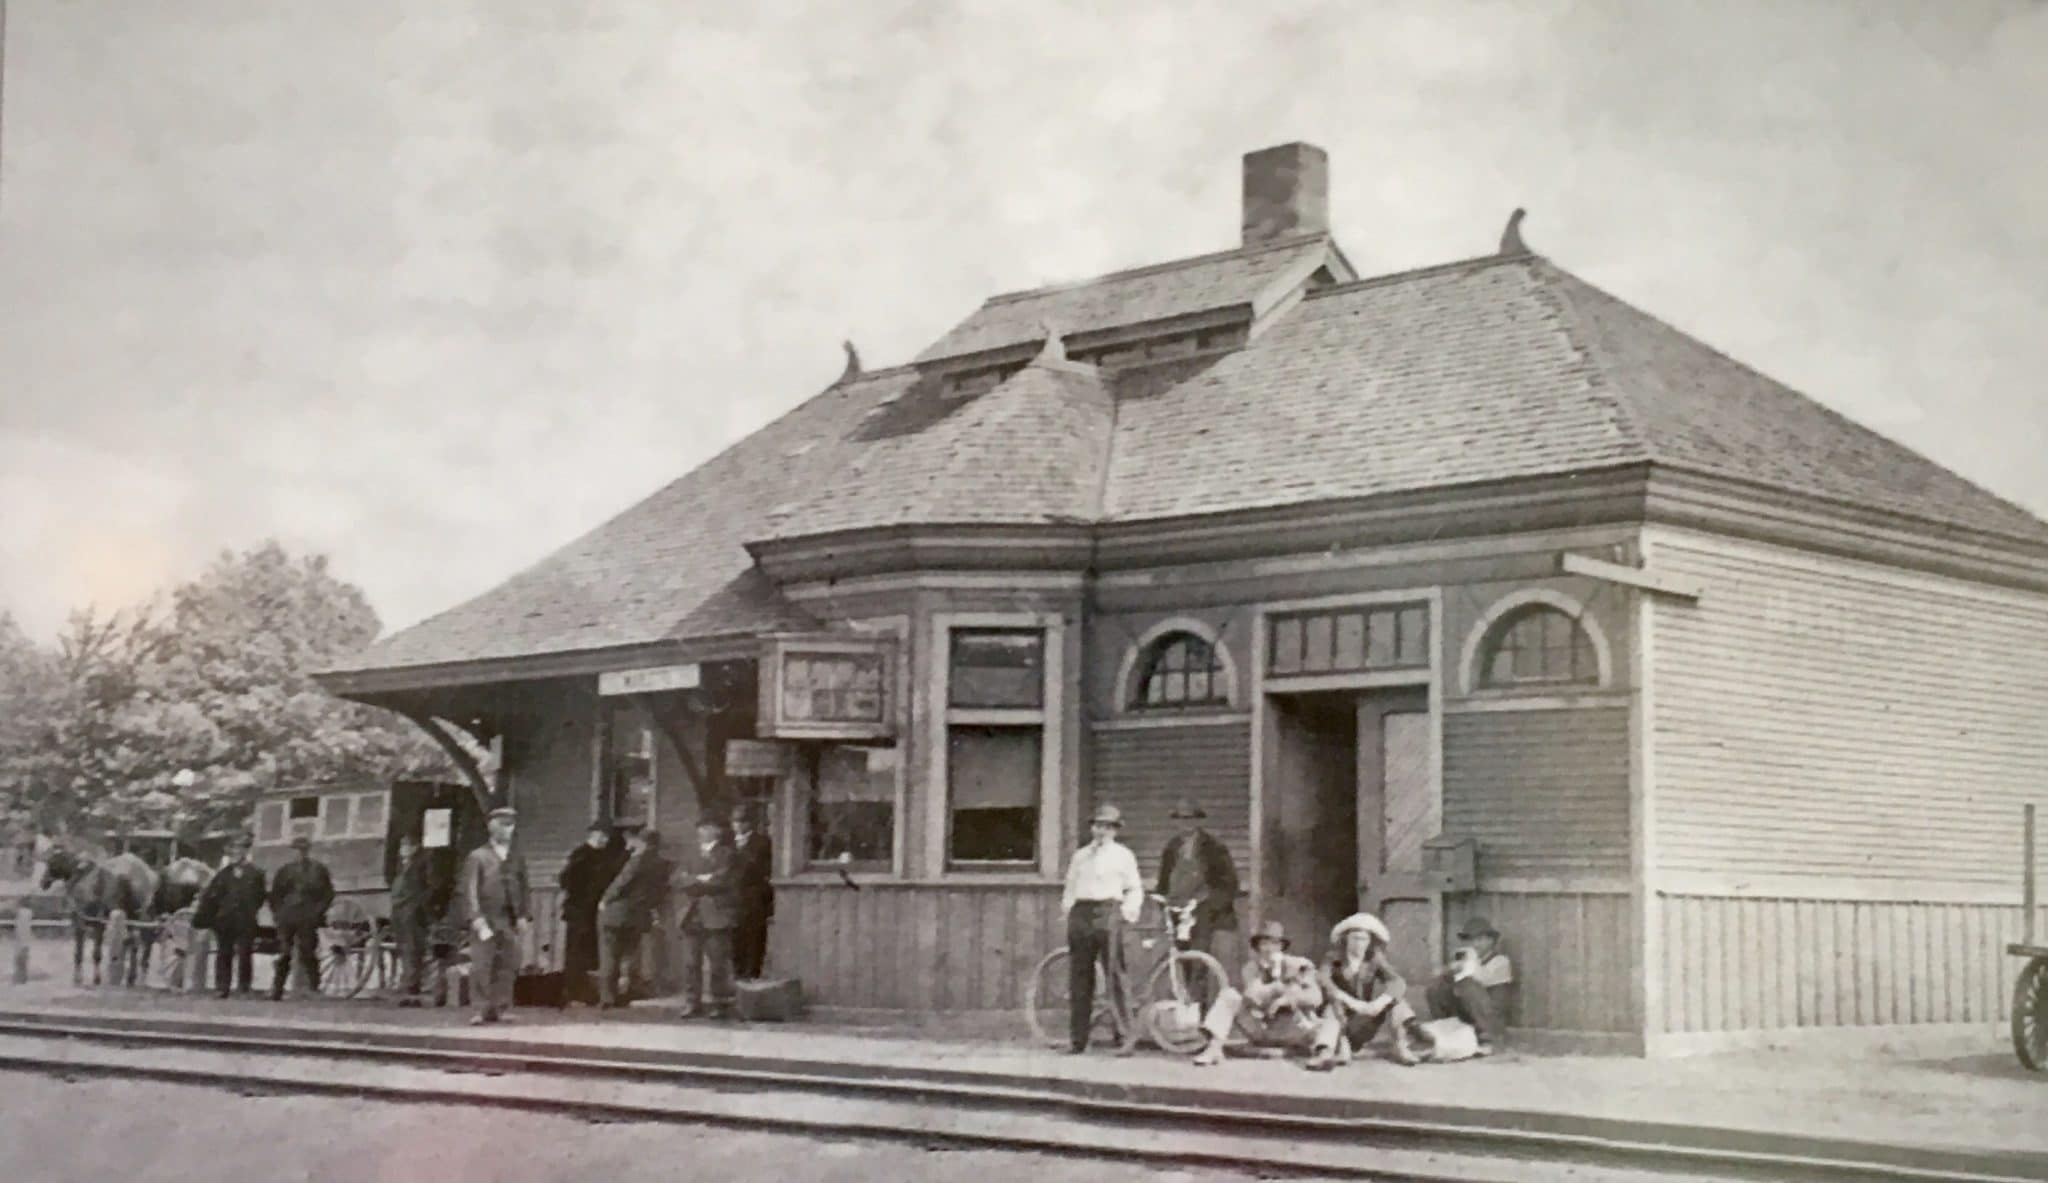 The Restored 1890 Marlette Railway Depot Faces Uncertain Future